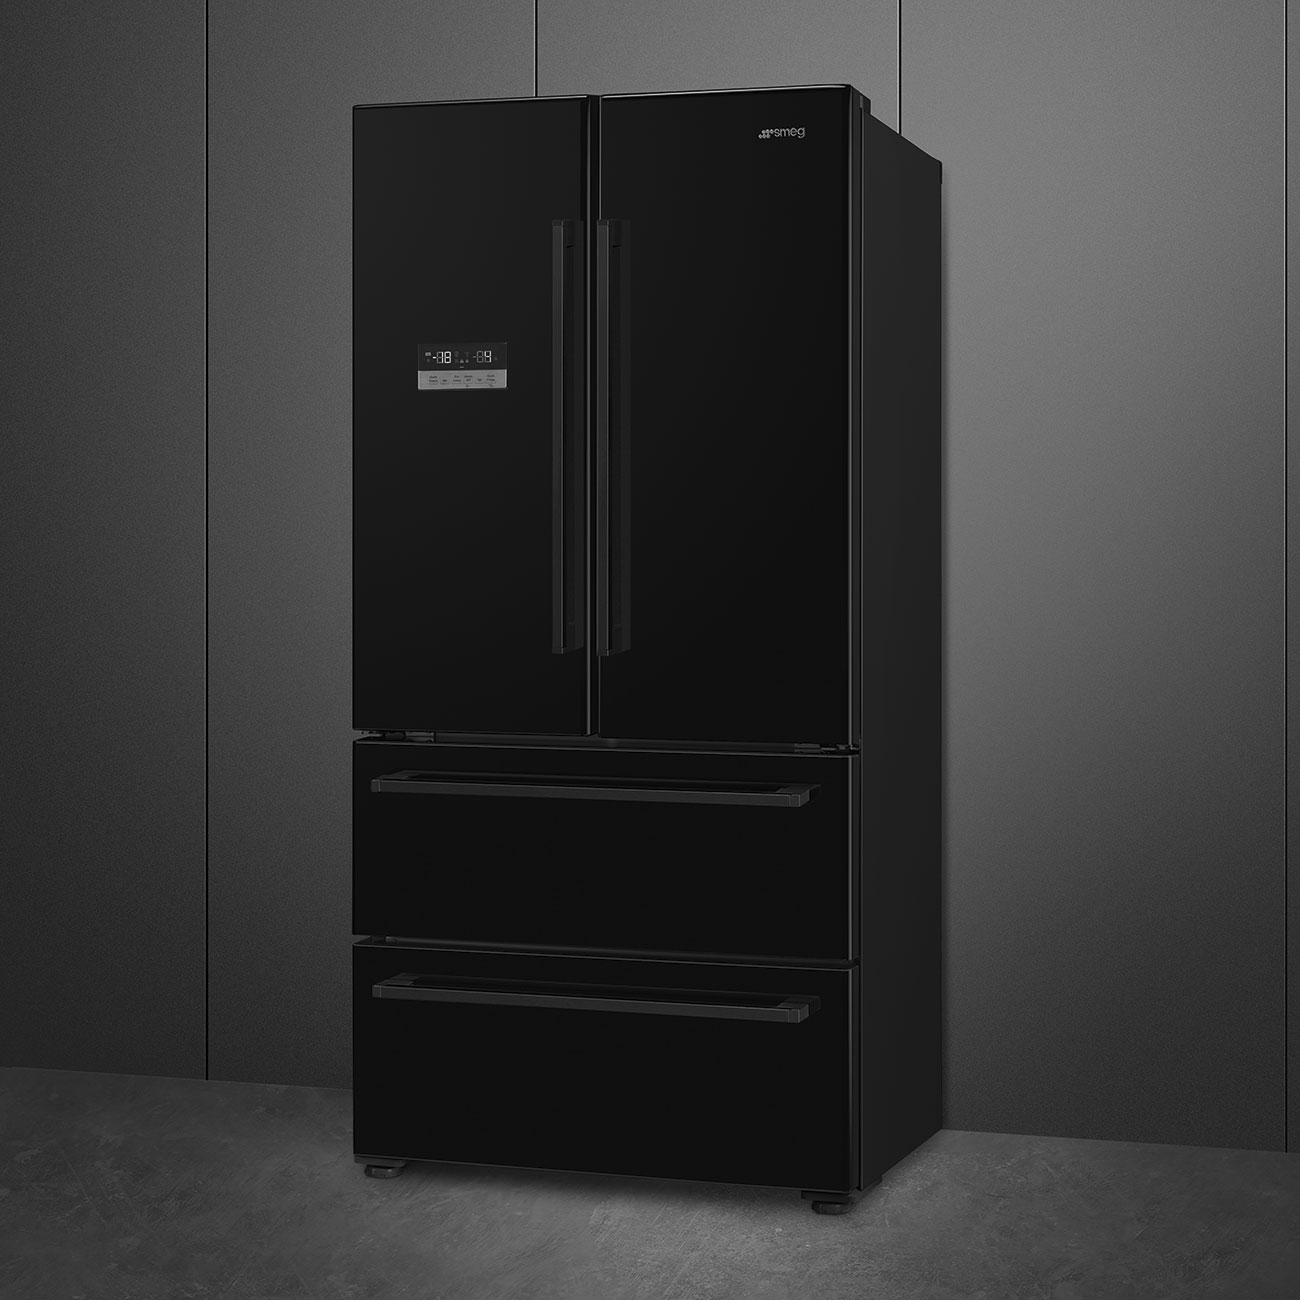 2 Doors & 2 Drawers Free standing refrigerator - Smeg_3